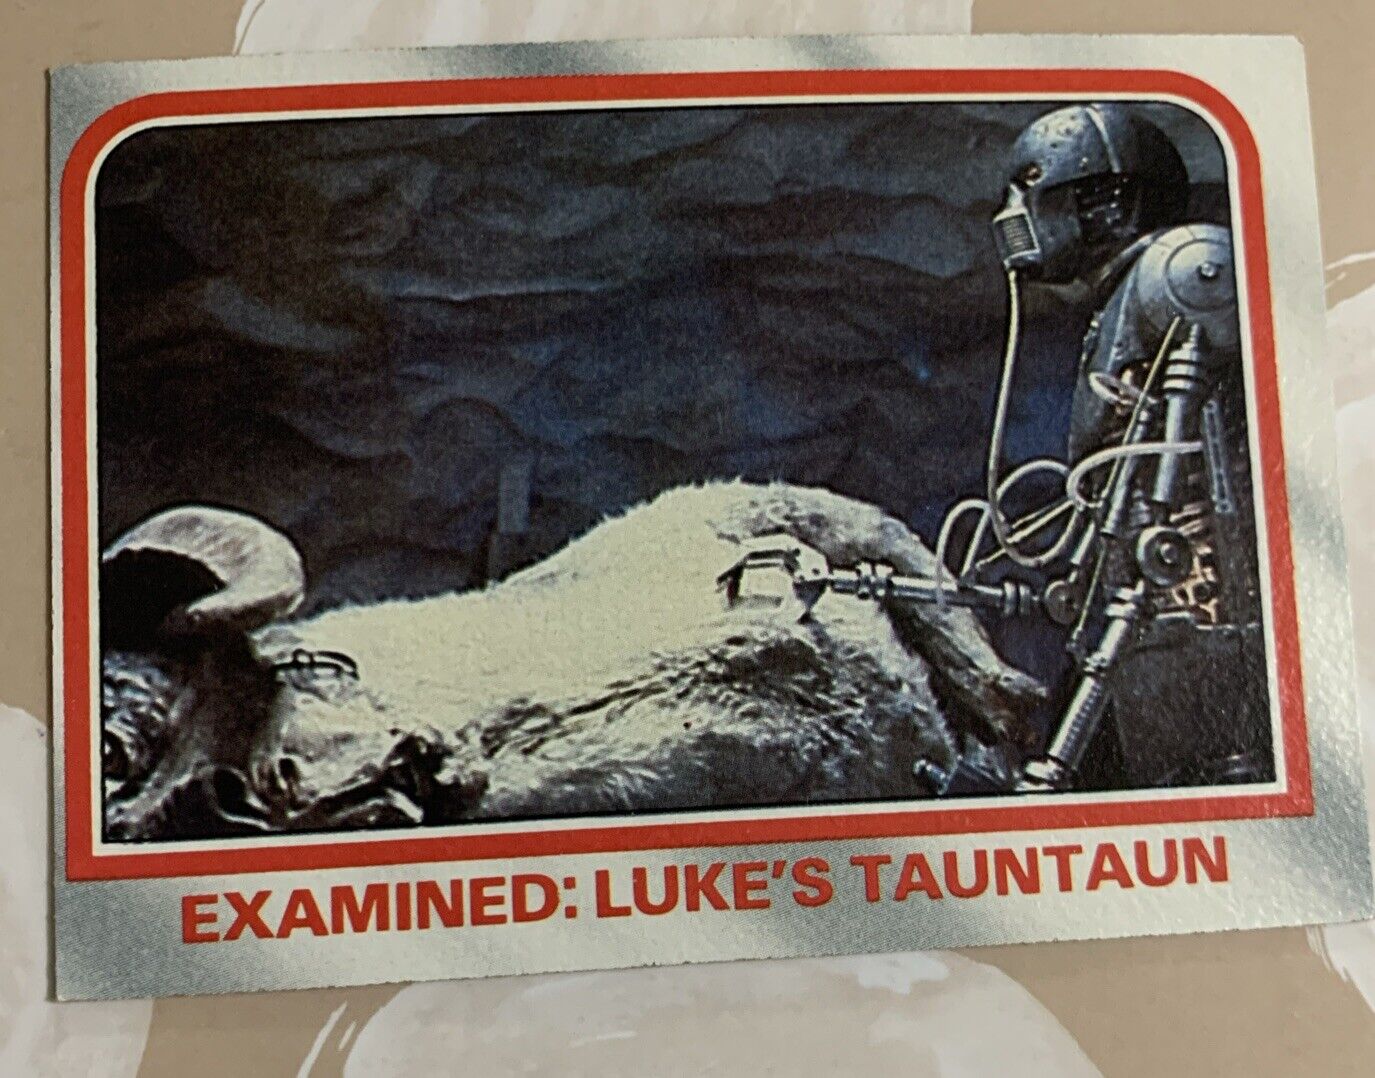 1980 Topps Star Wars The Empire Strikes Back #20 “Examined: Luke’s Tauntaun Card